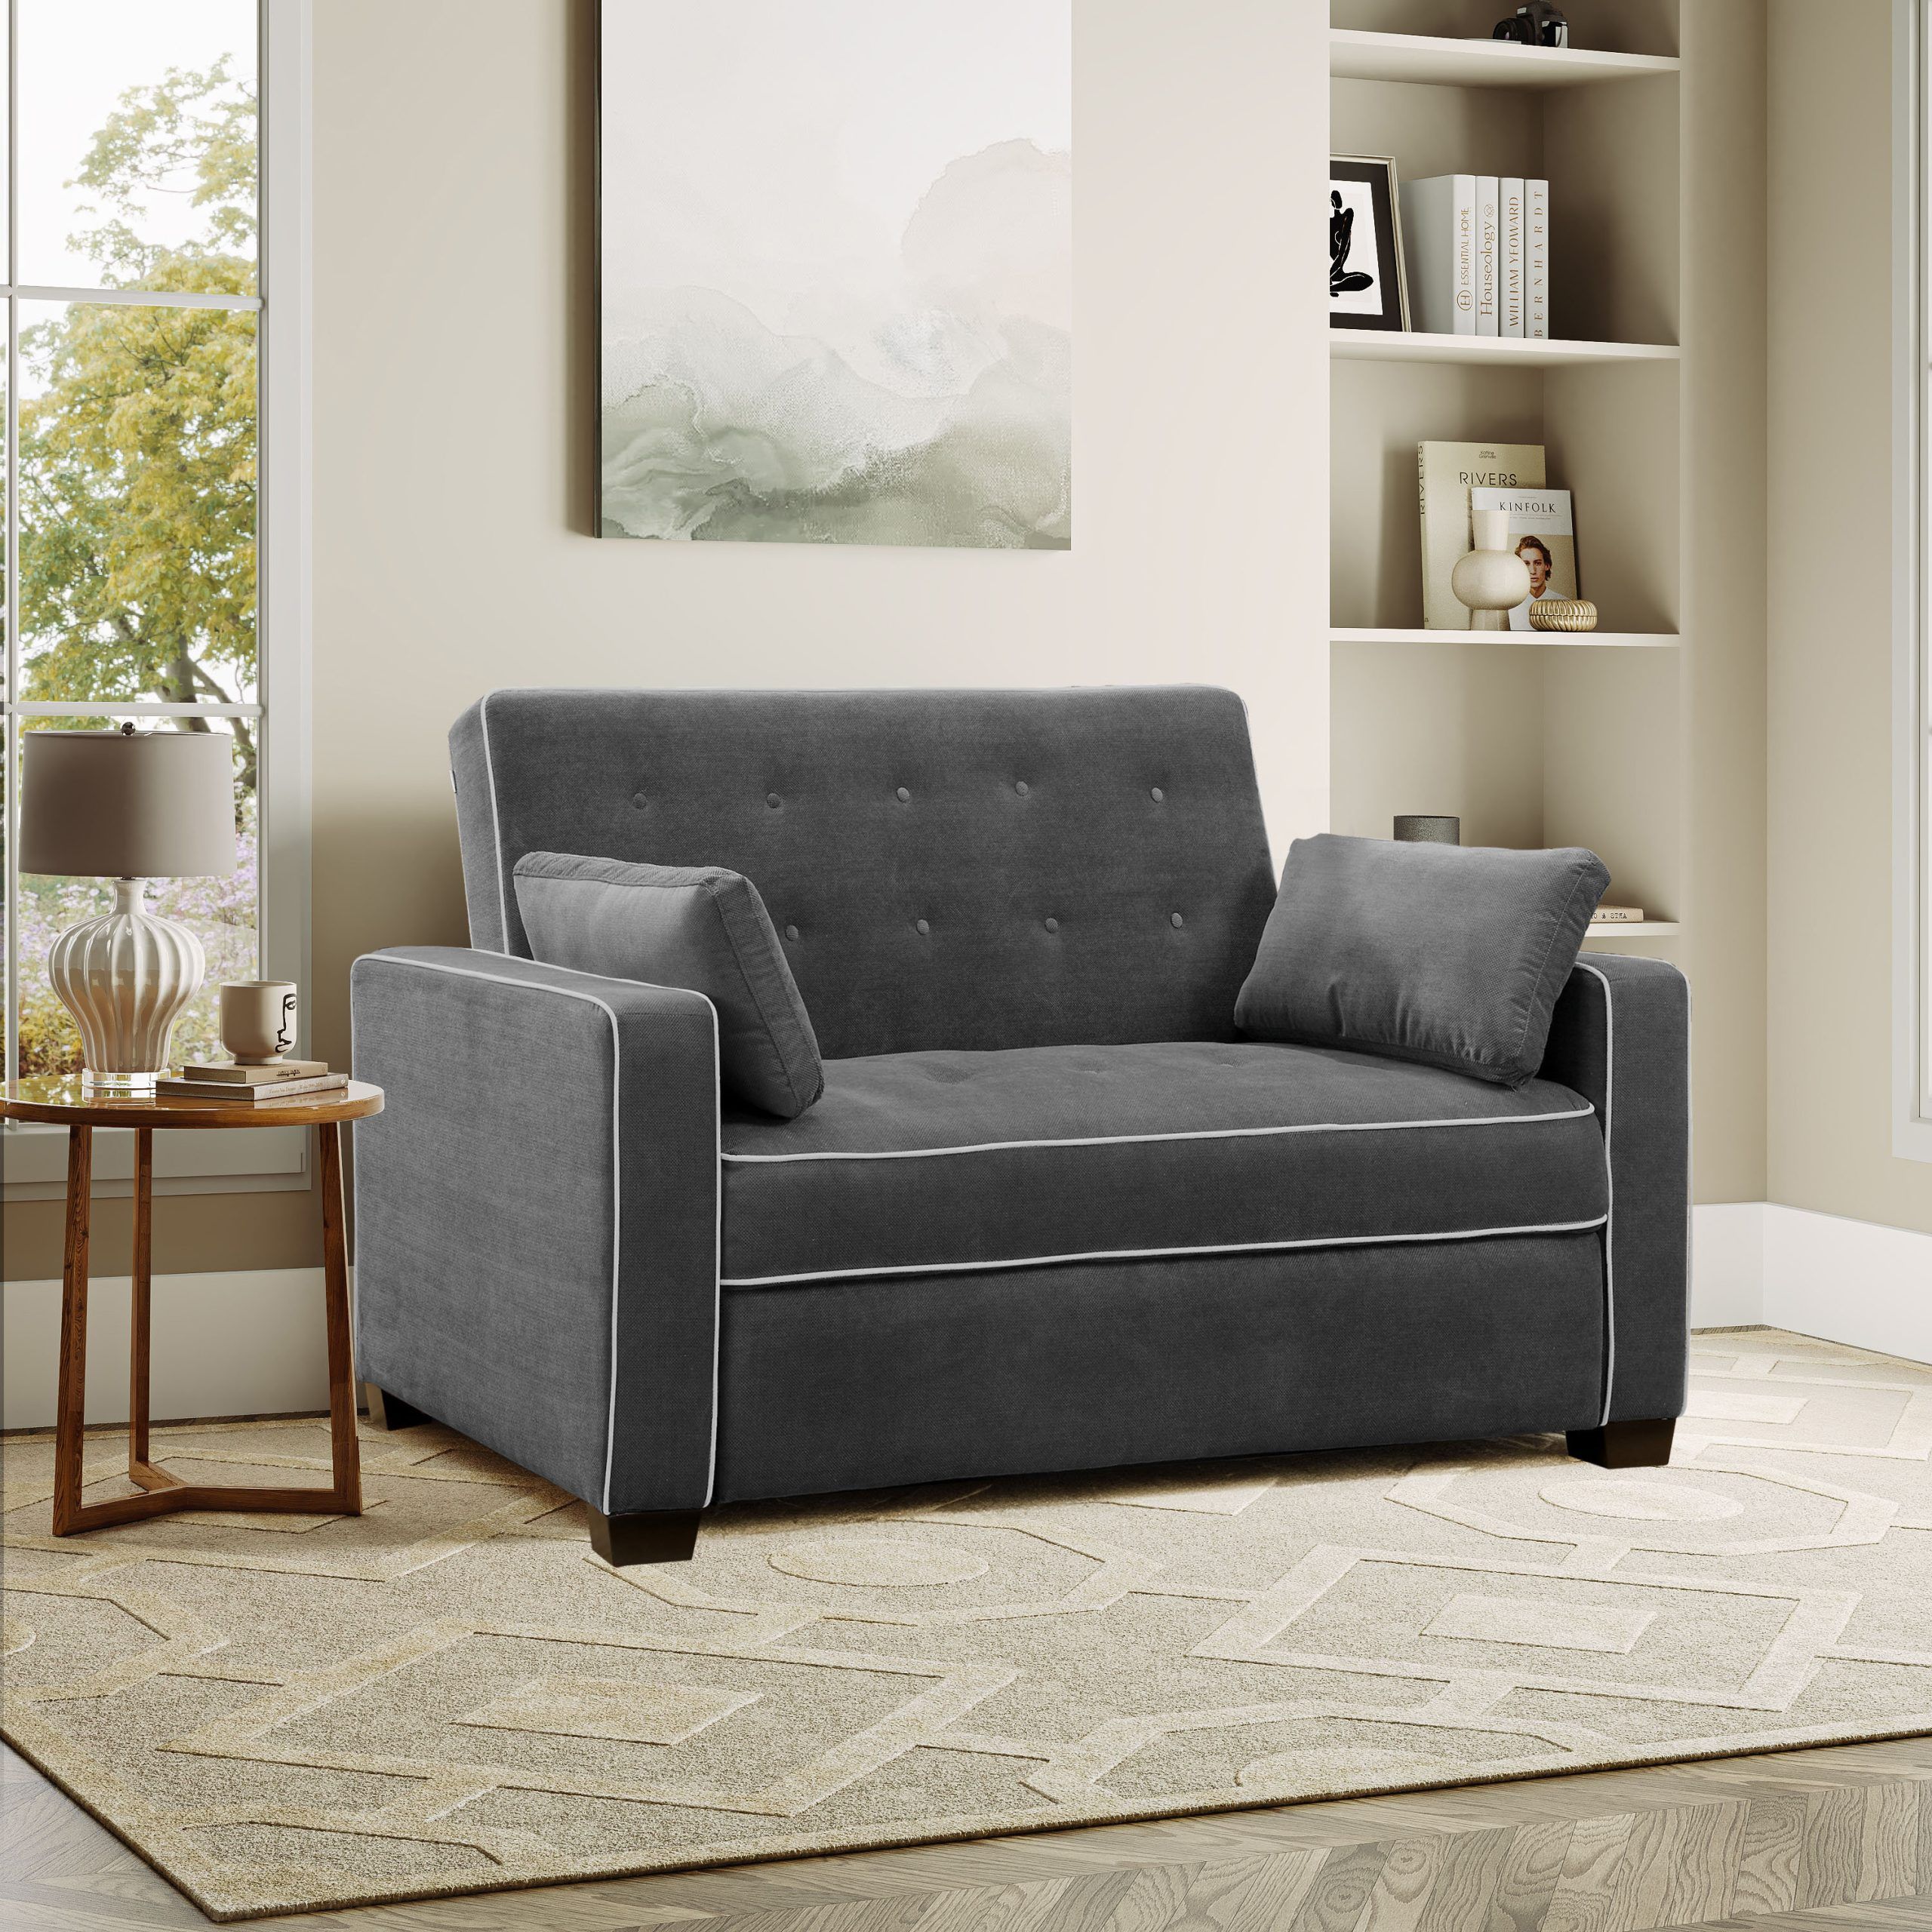 Serta Monroe Full Size Convertible Sleeper Sofa With Cushions & Reviews |  Wayfair Regarding Convertible Gray Loveseat Sleepers (View 13 of 15)